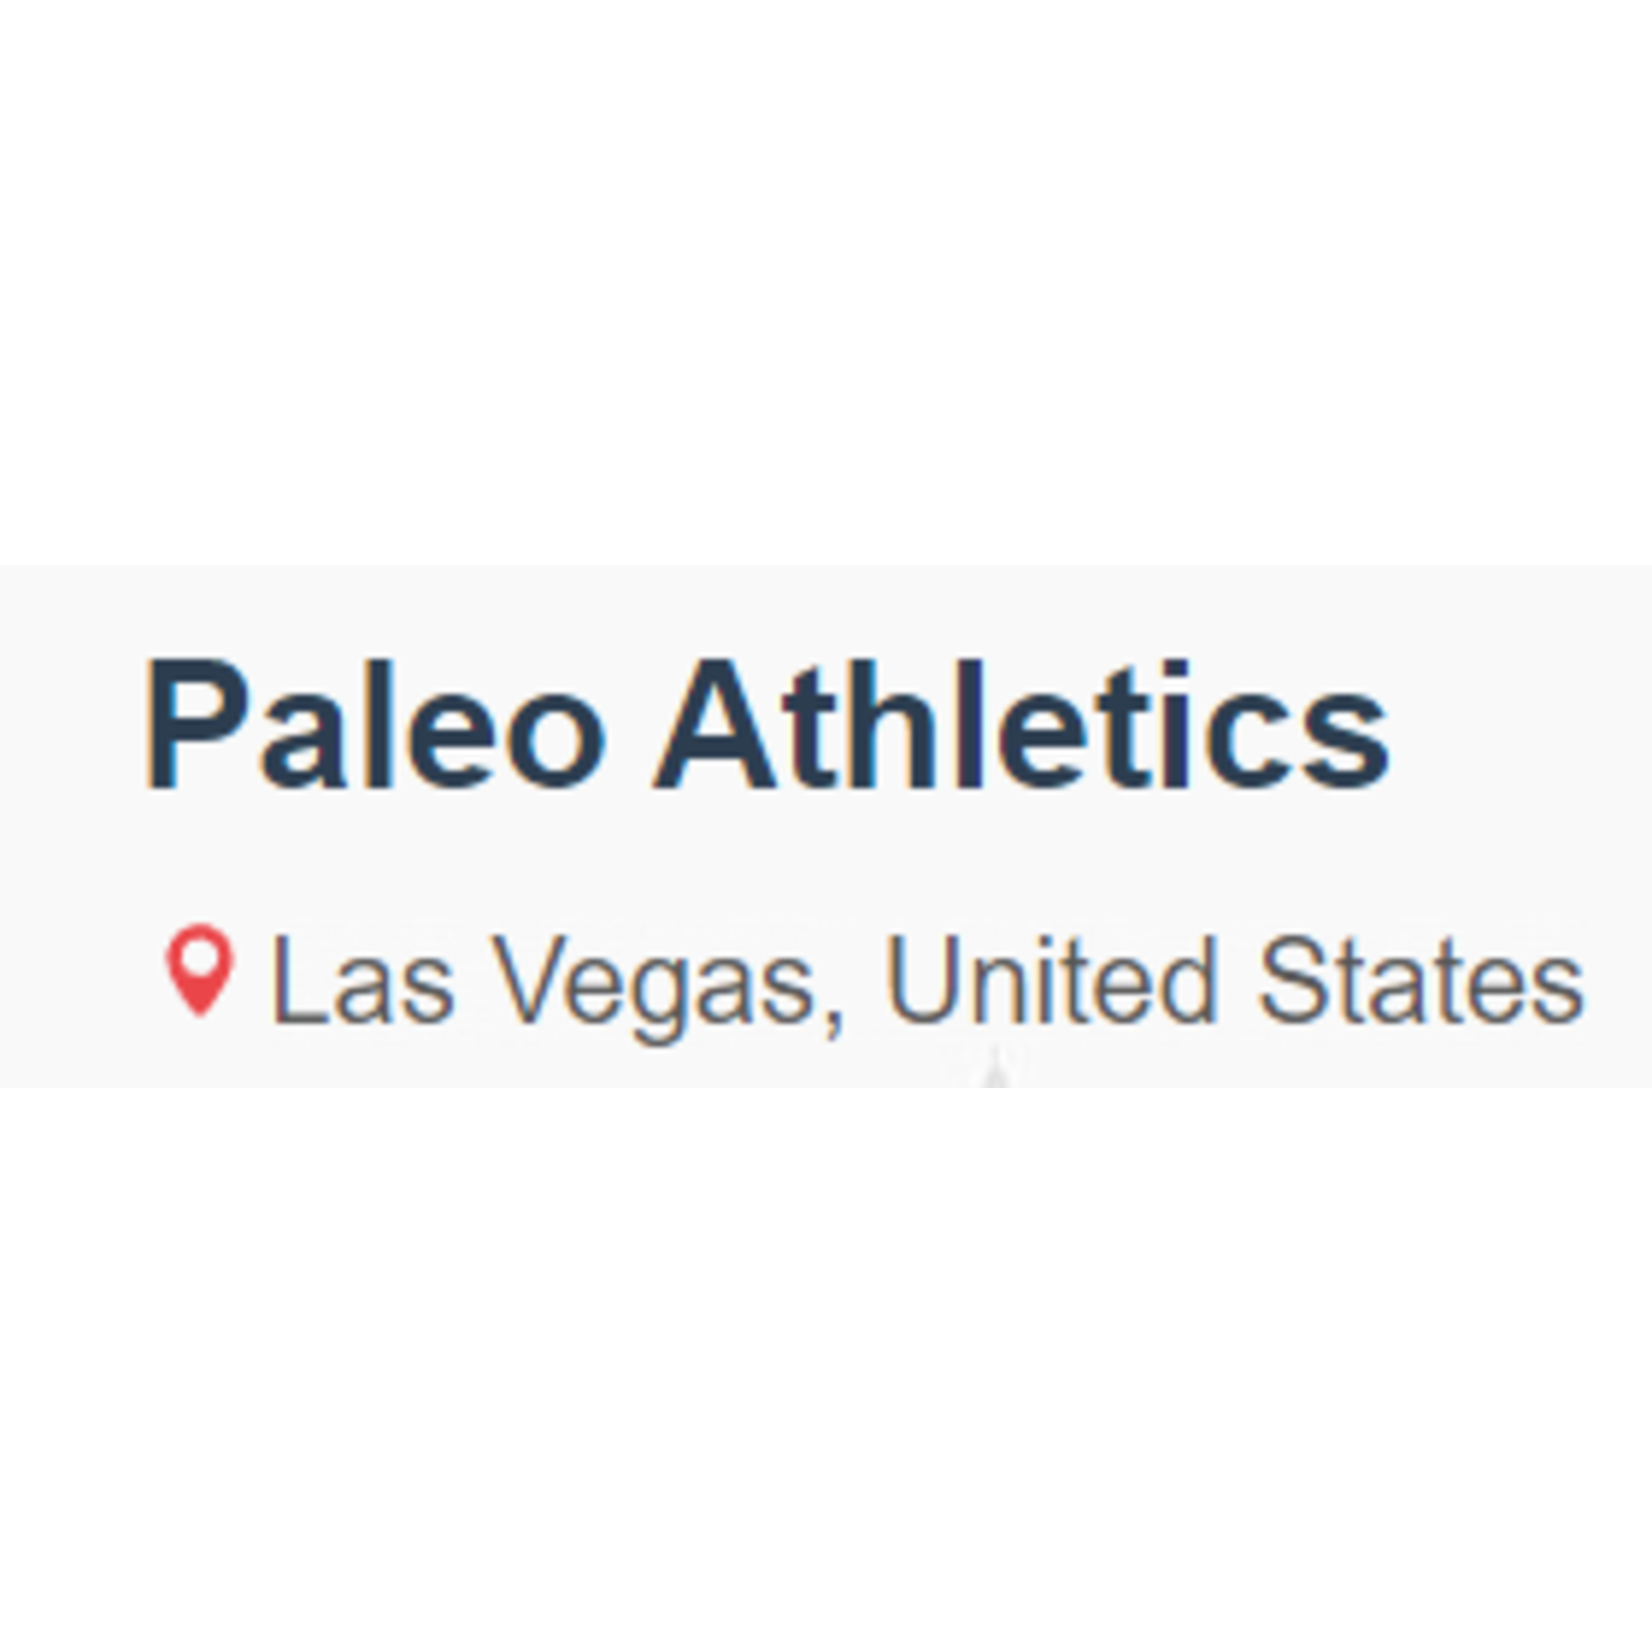 Paleo Athletics Paleo Athletics $50 - (2) Hour Health & Fitness Class